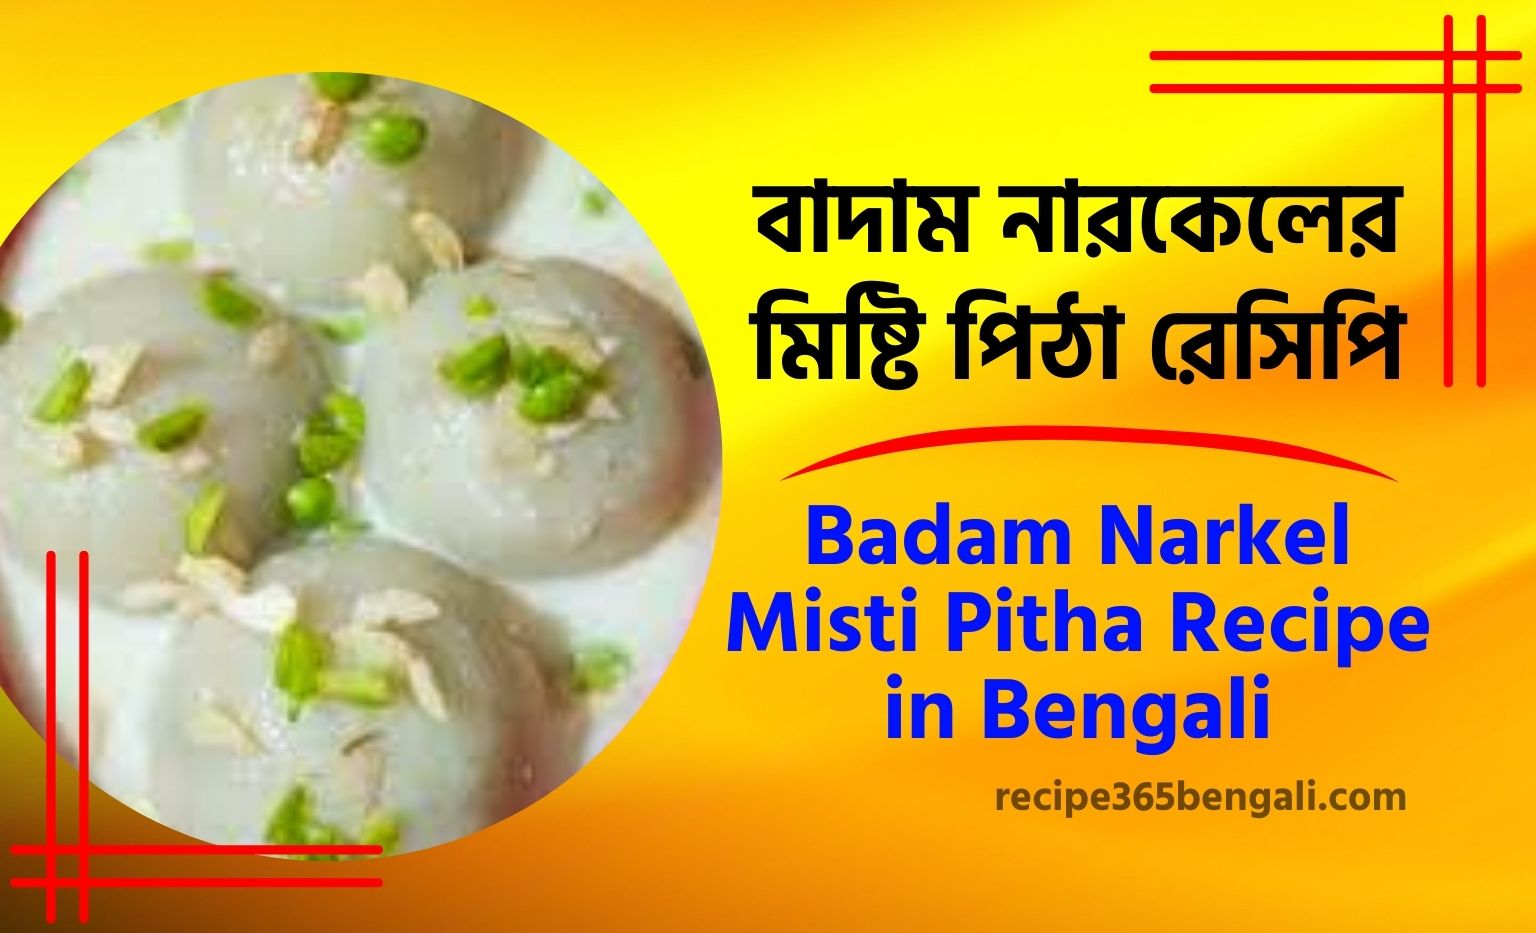 Badam Narkel Misti Pitha Recipe in Bengali